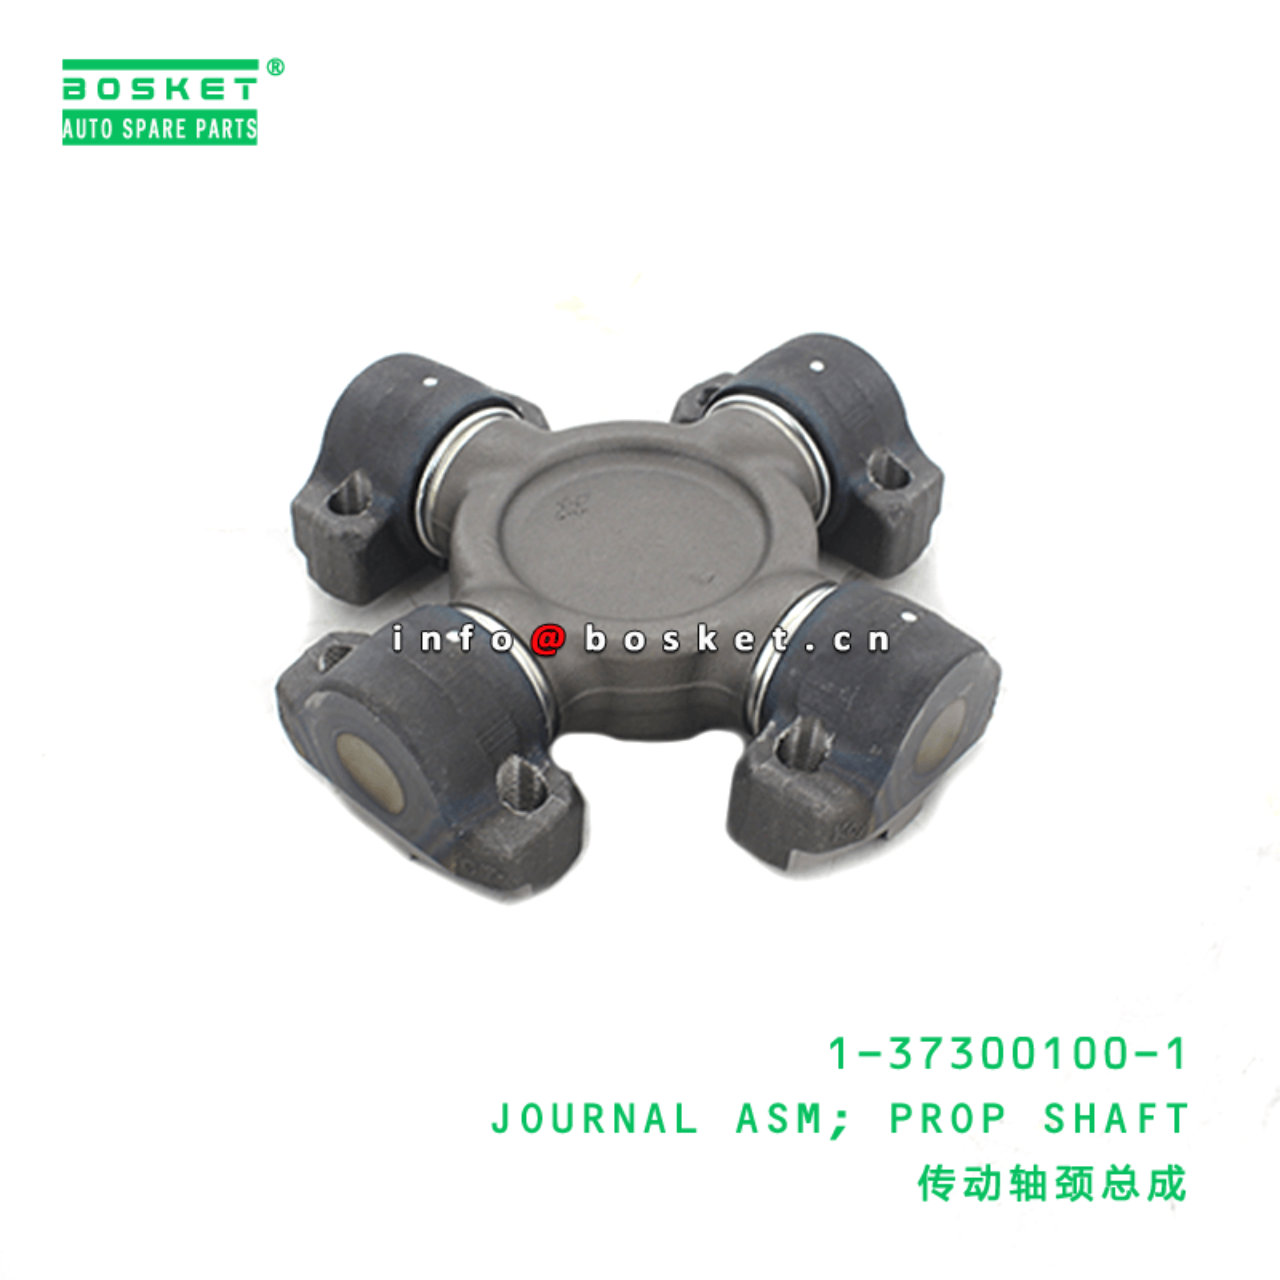  1-37300100-1 Propeller Shaft Journal Assembly 1373001001 Suitable for ISUZU VC46